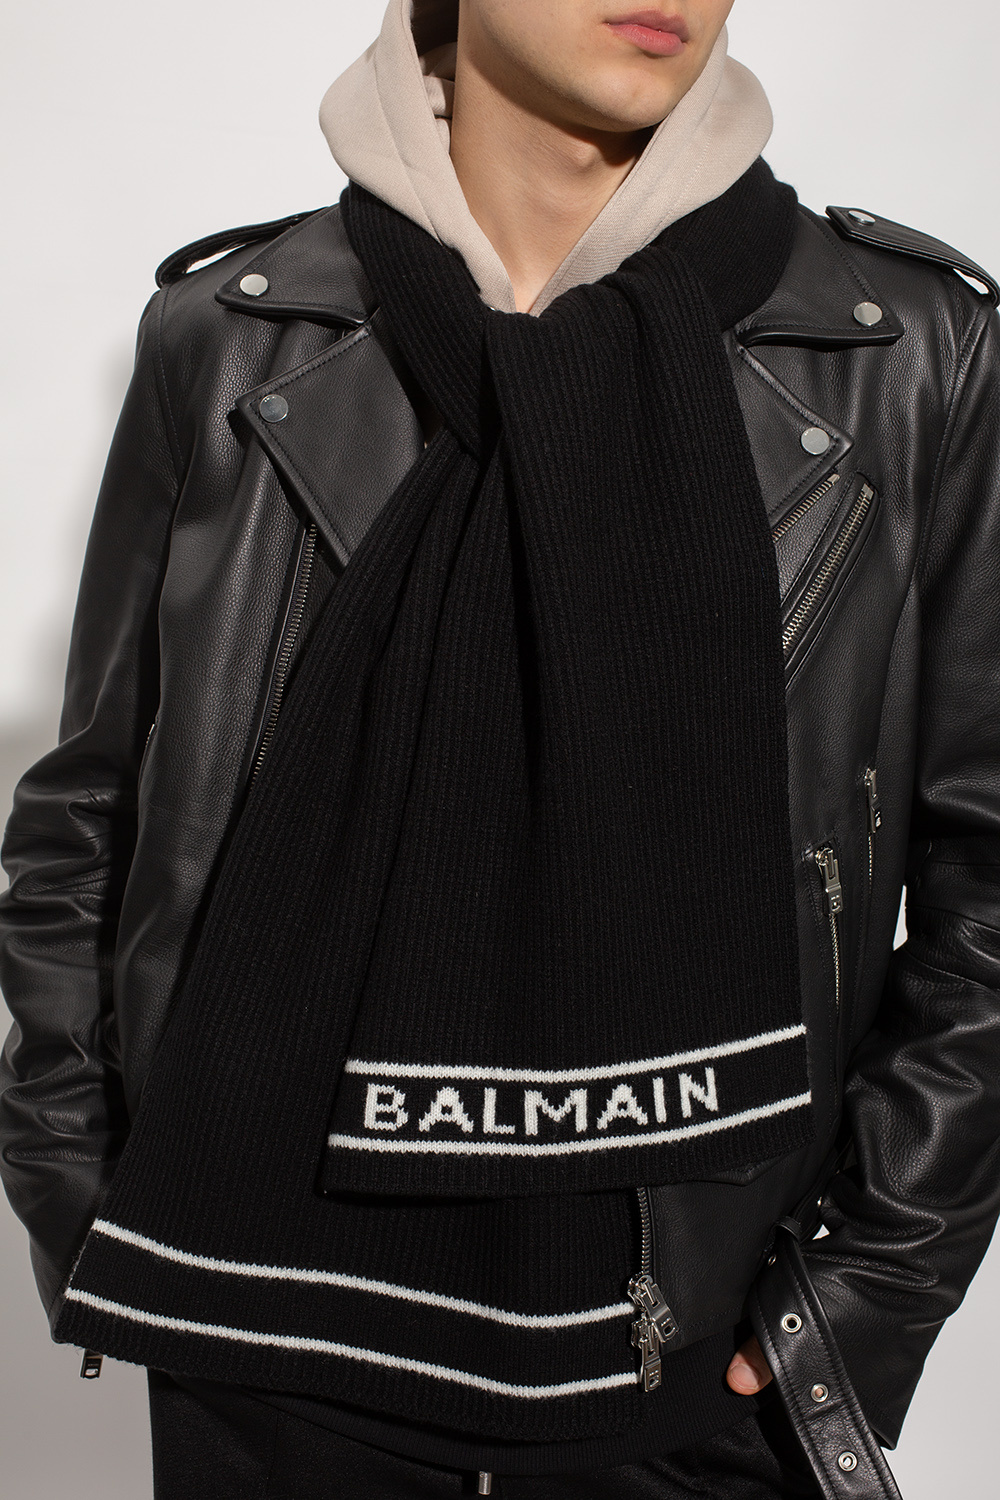 Balmain balmain double breasted blazer jacket item